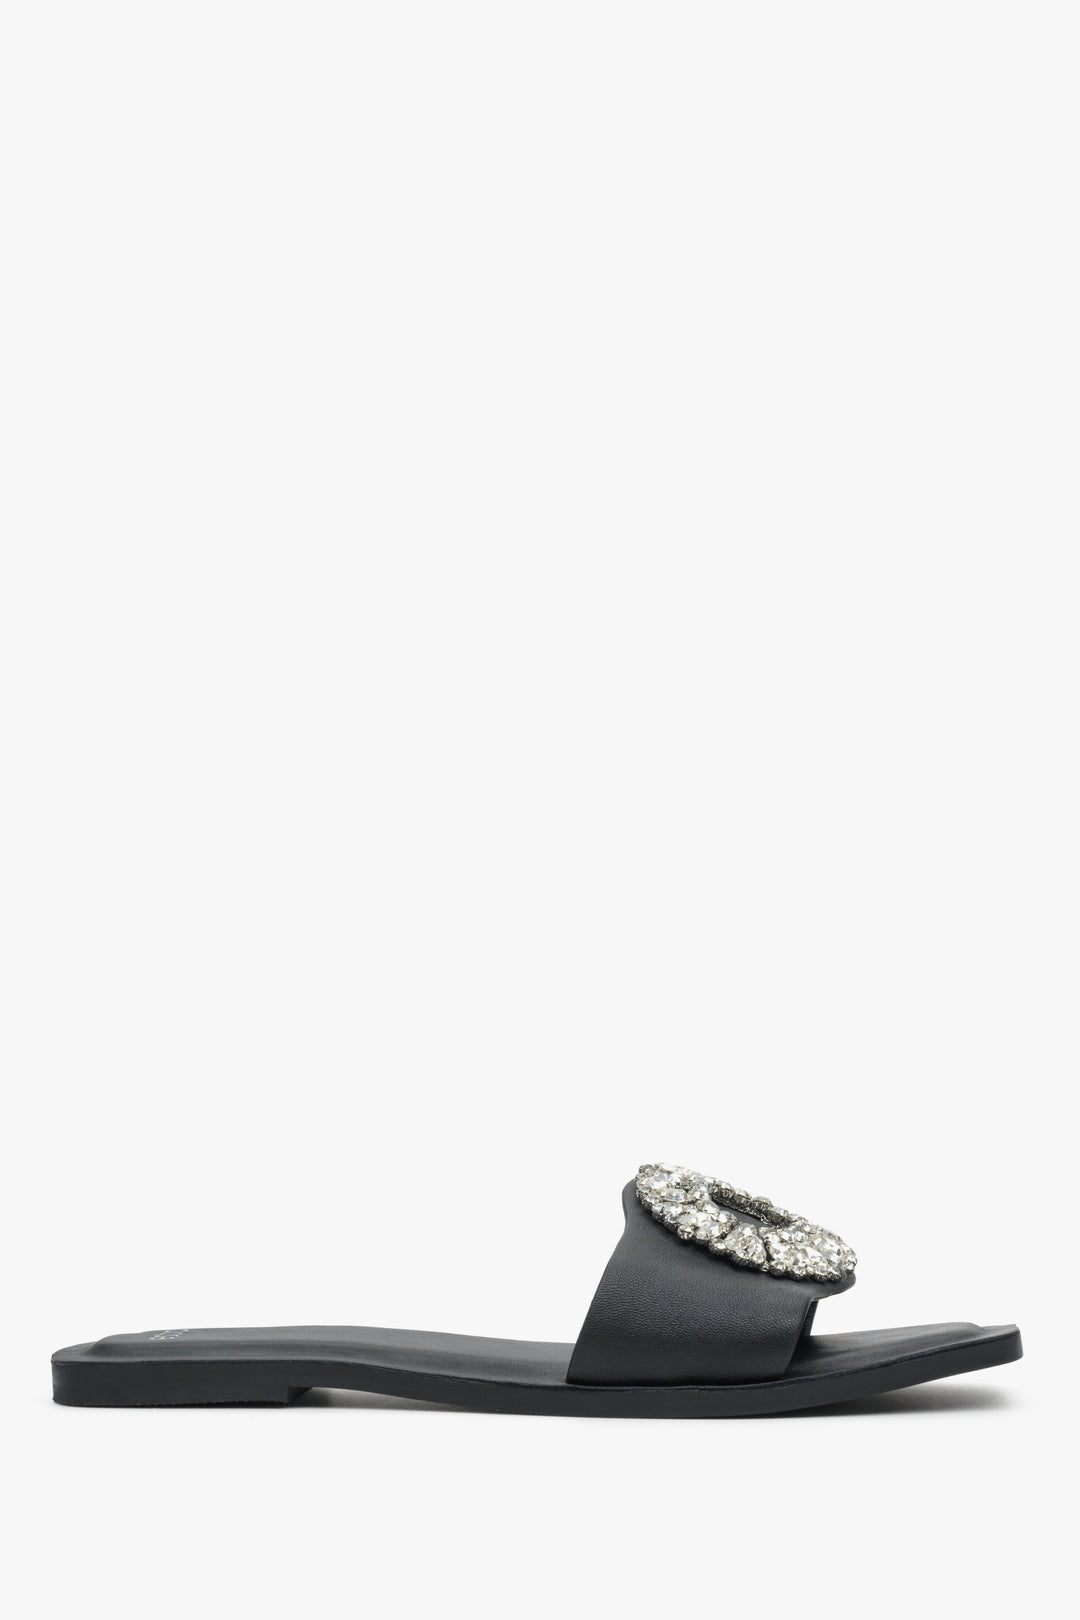 Women's black genuine leather slide sandals Estro - shoe profile.